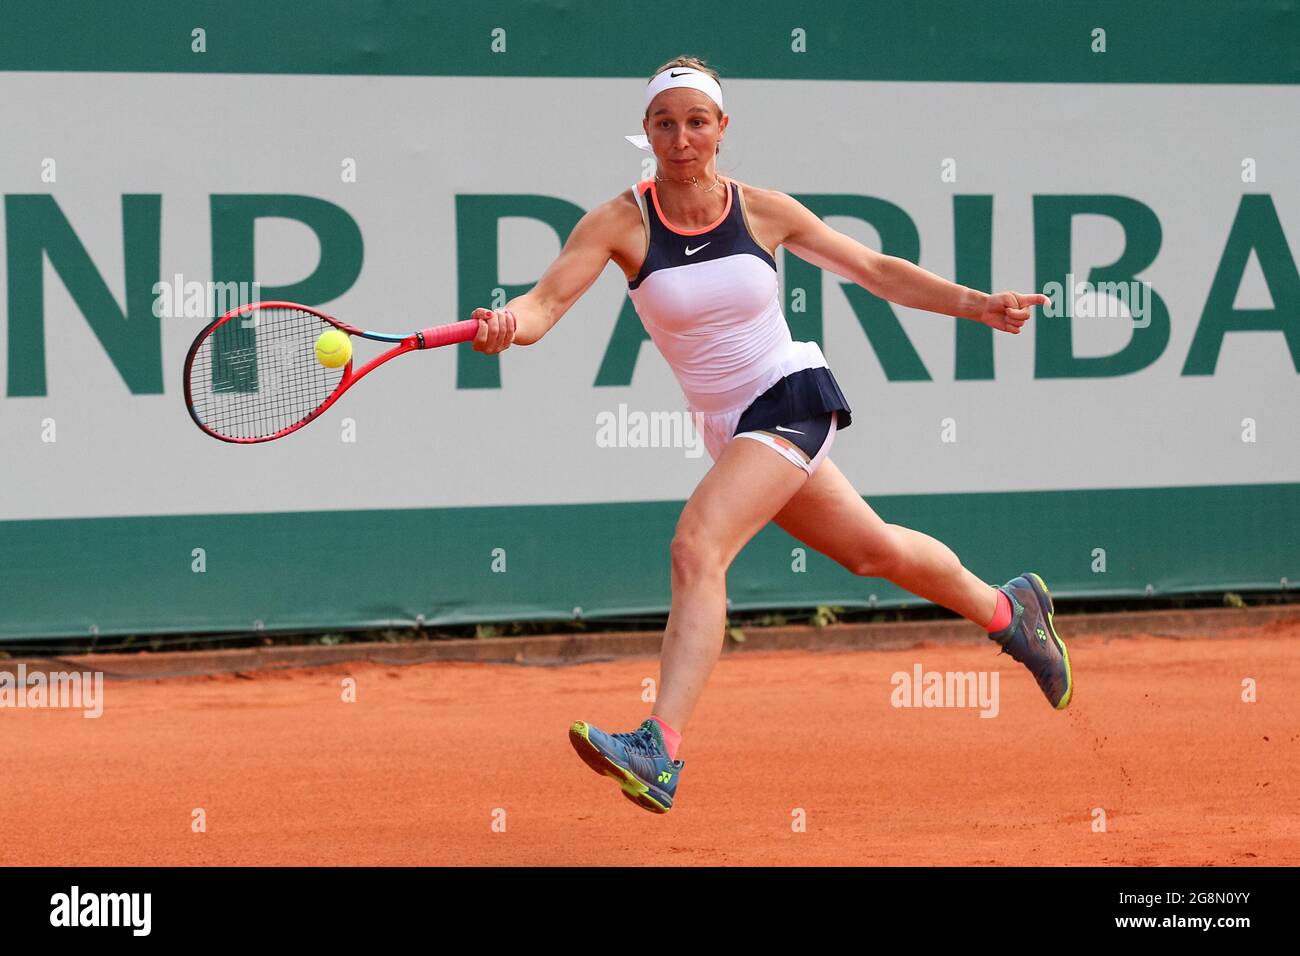 Gdansk, Poland. 21st July, 2021. Tamara Korpatsch (GERMANY) plays against Weronika Falkowska (POLAND) during the BNP Paribas Poland Open Tournament ( WTA 250 category) in Gdynia